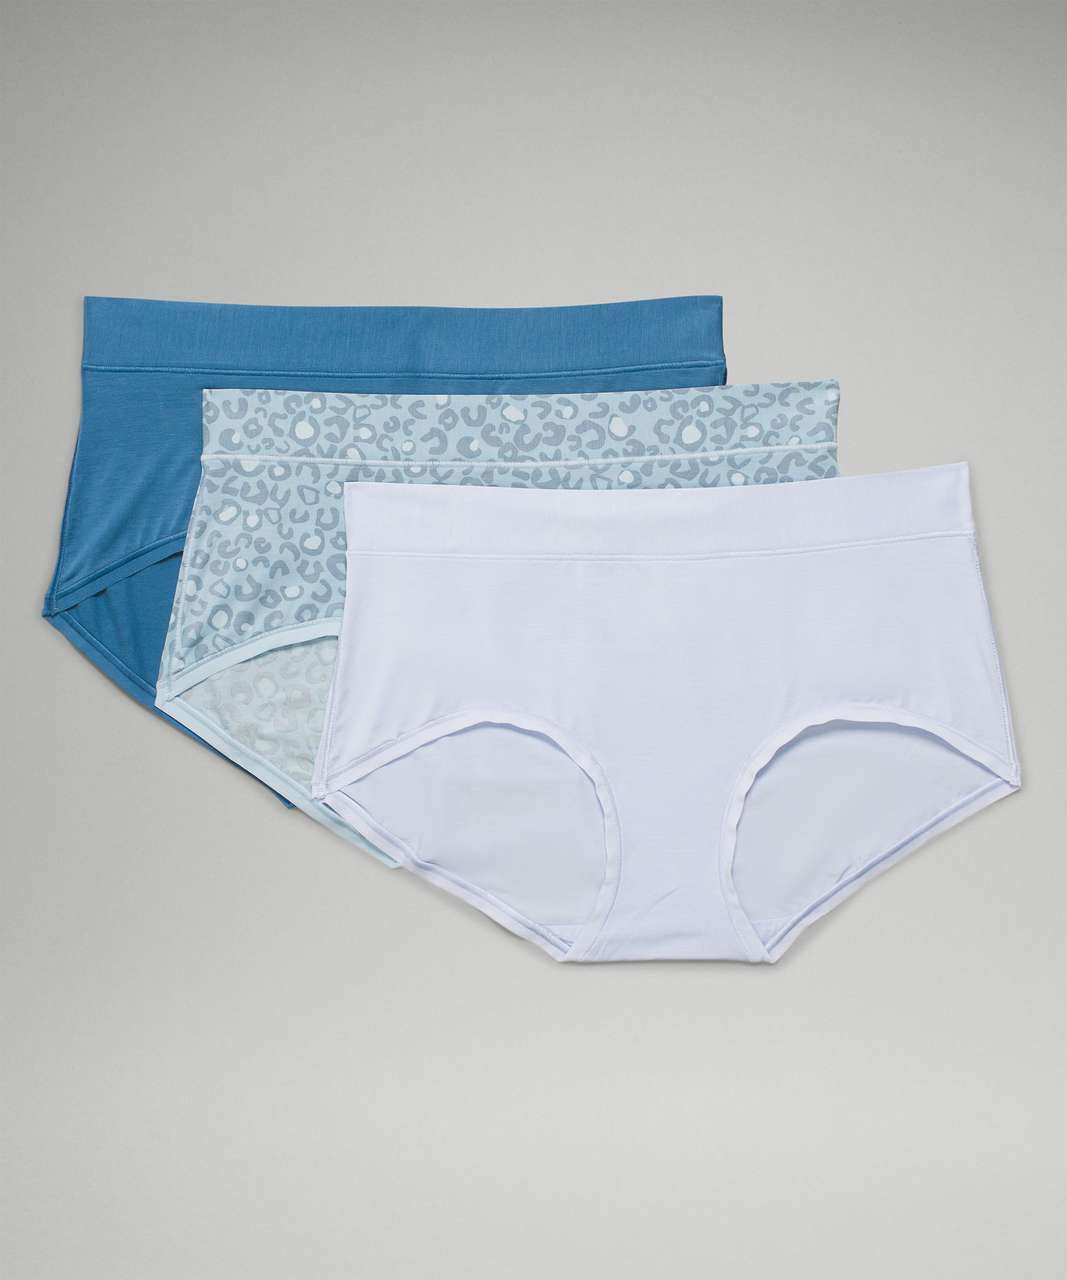 Lululemon UnderEase Mid-Rise Boyshort Underwear 3 Pack - Pastel